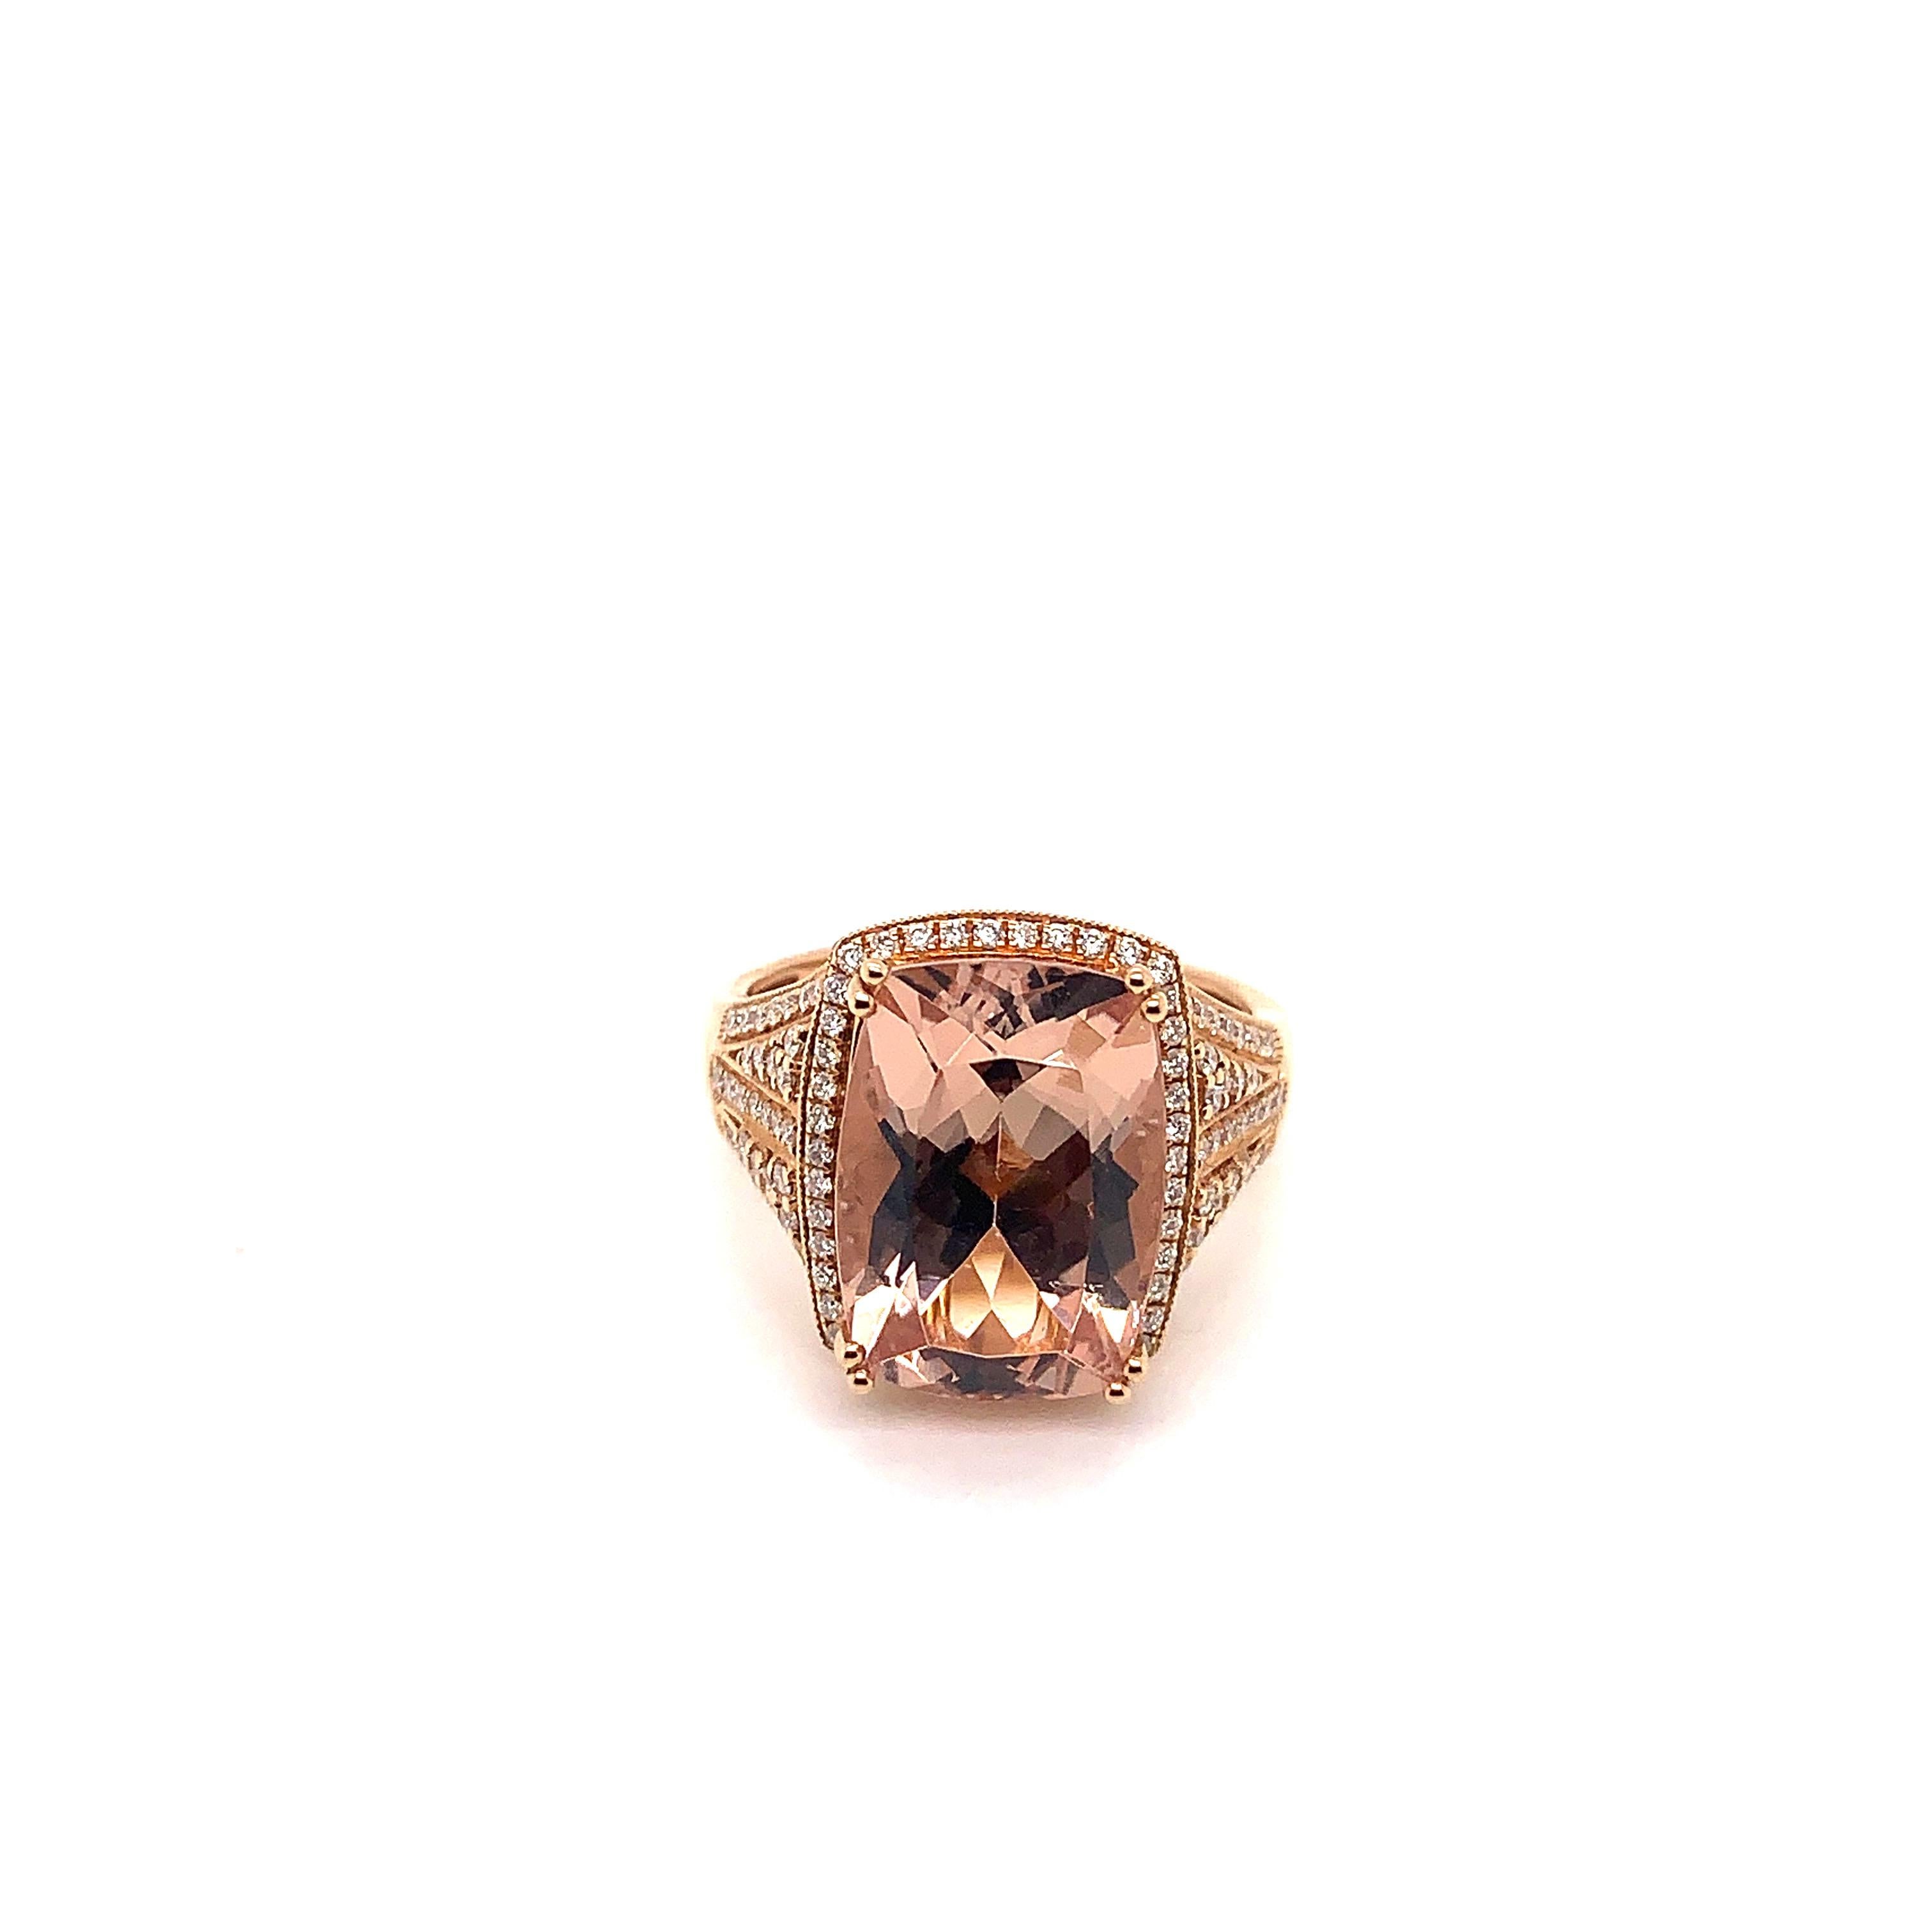 Klassischer Morganit-Ring aus 18 Karat Roségold mit Diamanten. 

Morganit: 6,49 Karat in Kissenform.
Diamanten: 0.3702 Karat, Farbe G, Reinheit VS. 
Gold: 4,988 g, 18 Karat Roségold. 